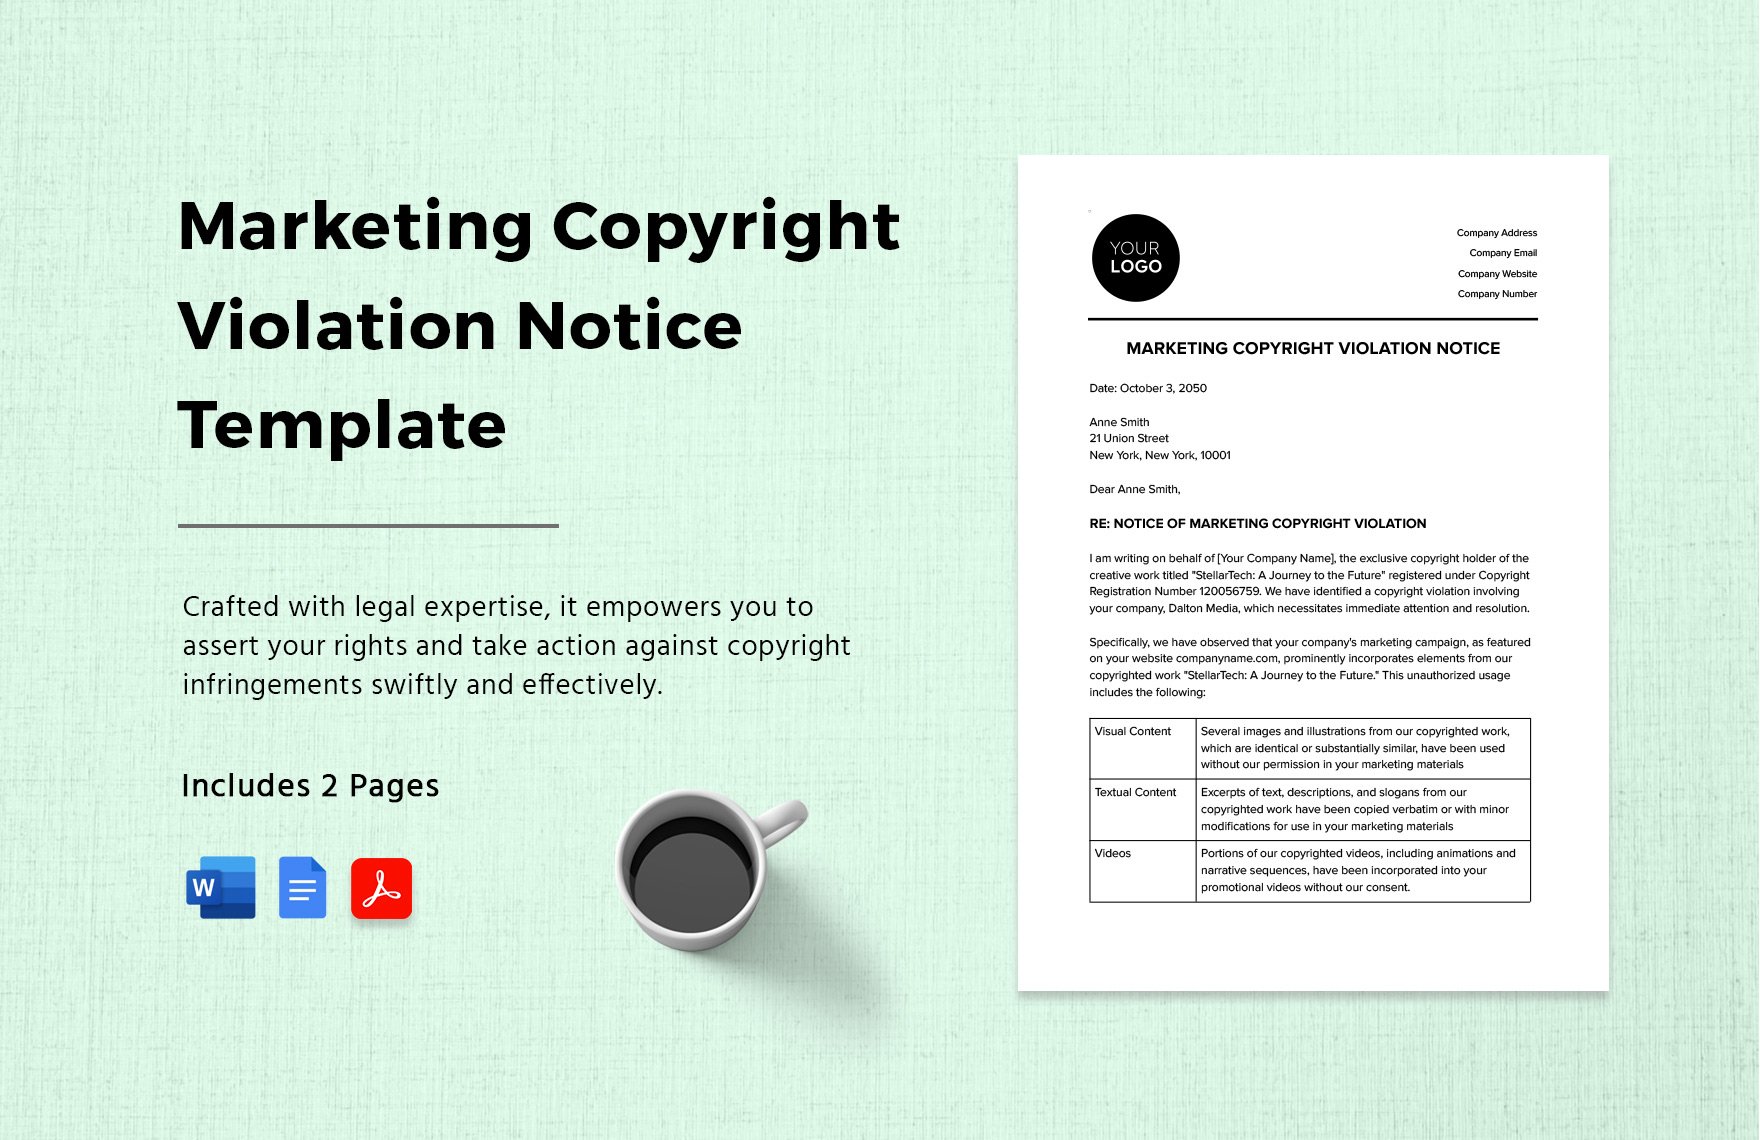 Marketing Copyright Violation Notice Template in Word, Google Docs, PDF